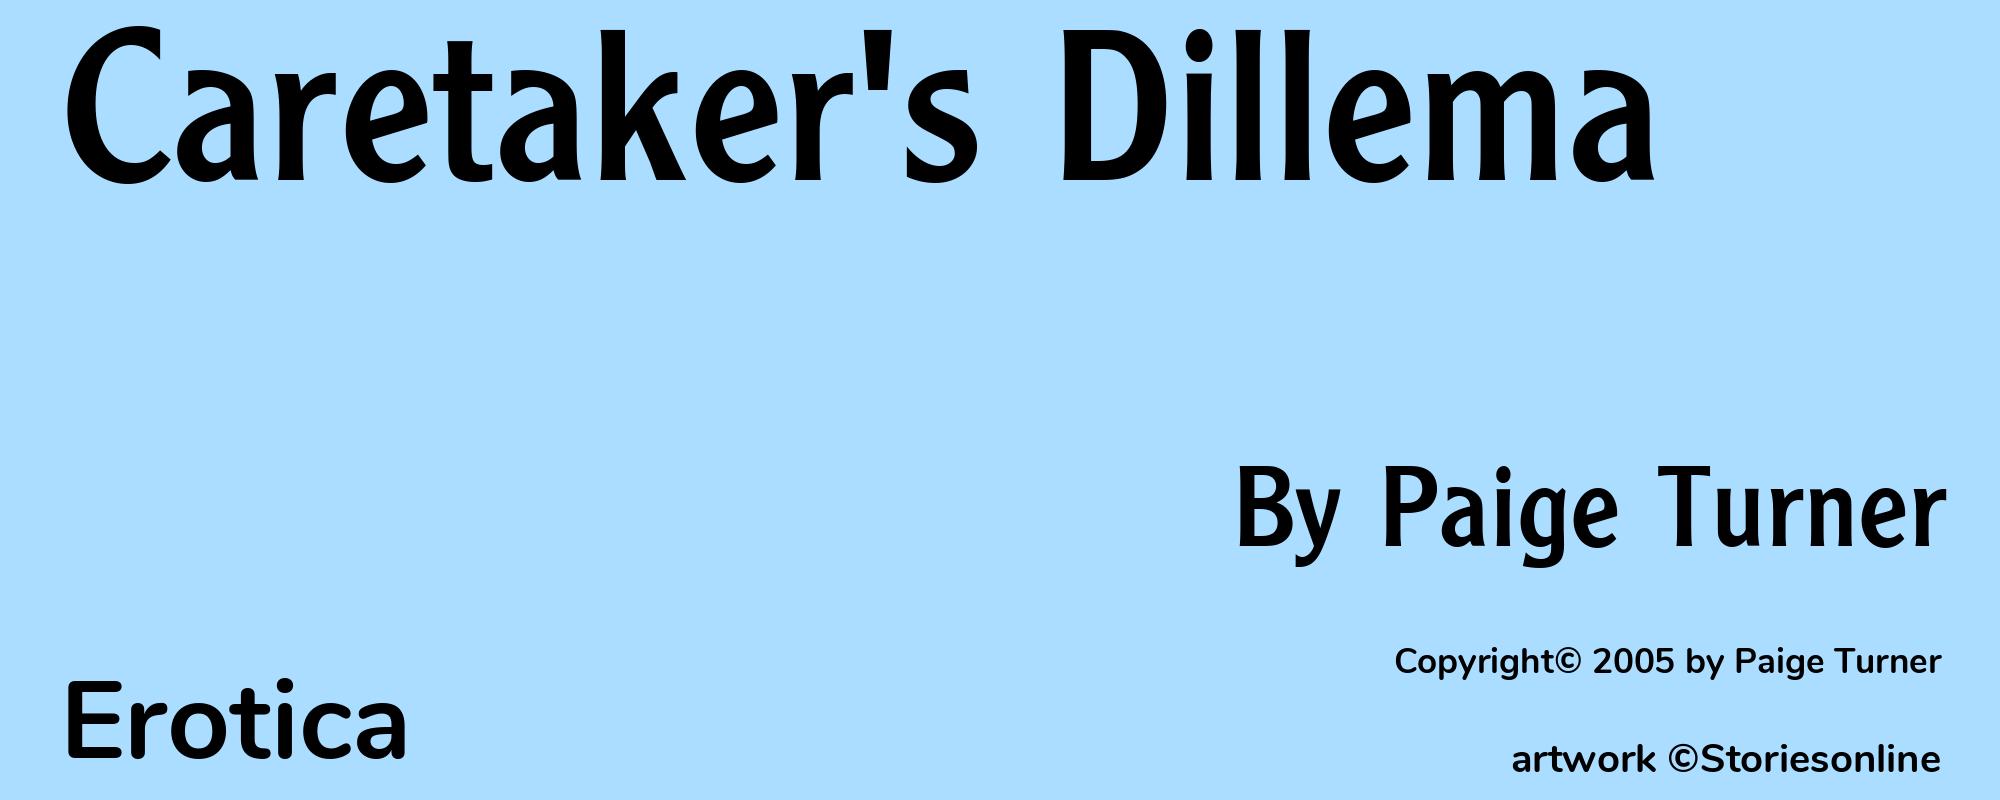 Caretaker's Dillema - Cover